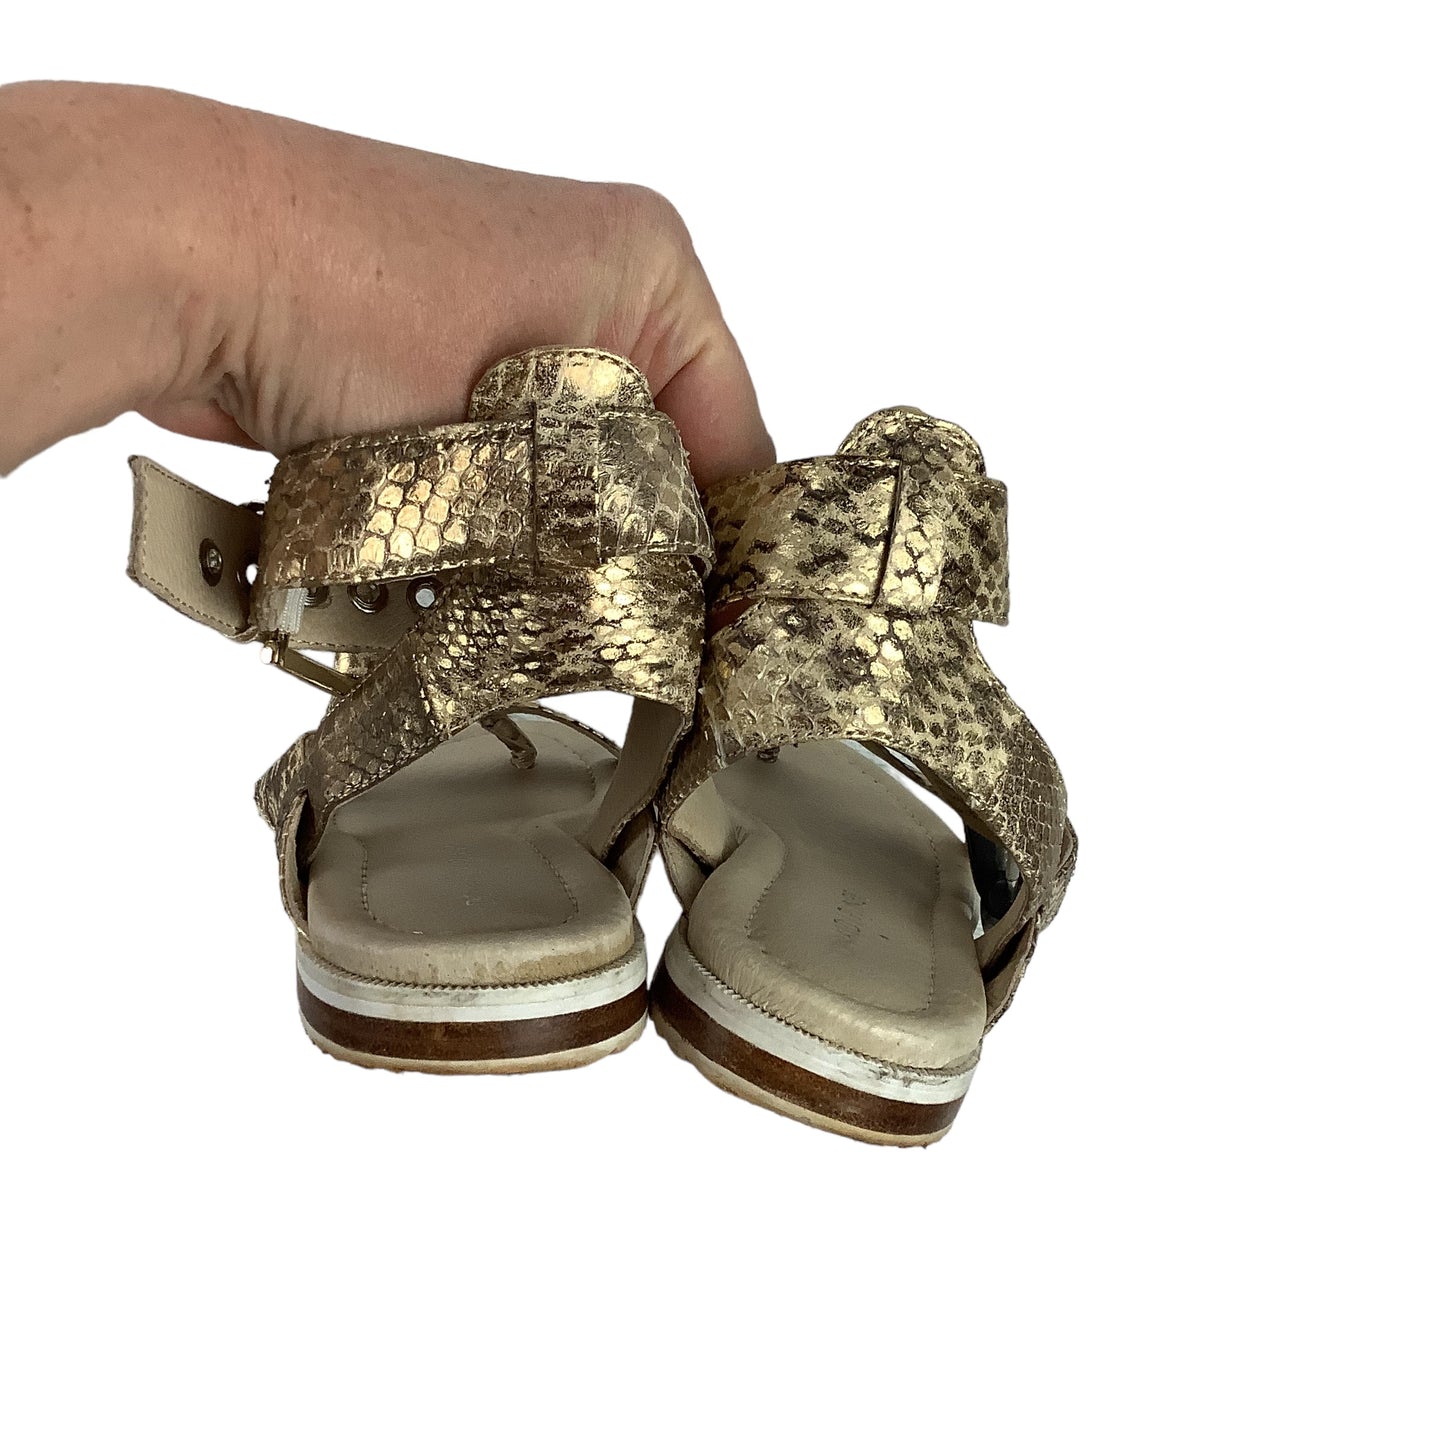 Sandals Flats By Donald Pliner  Size: 7.5